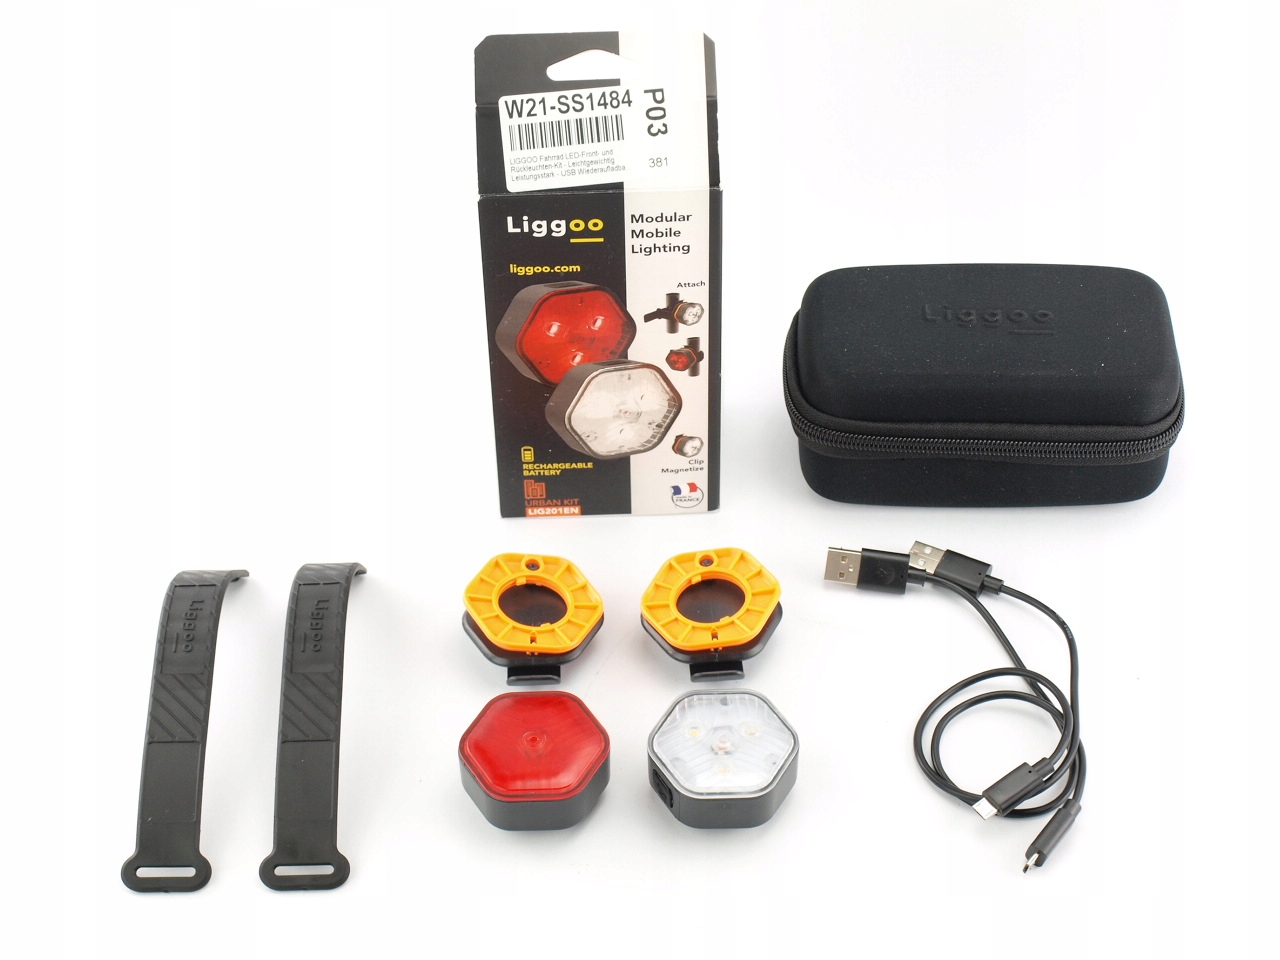 Liggoo Urban Kit Modular Mobile Lighting RRP 13.50 CLEARANCE XL 8.99